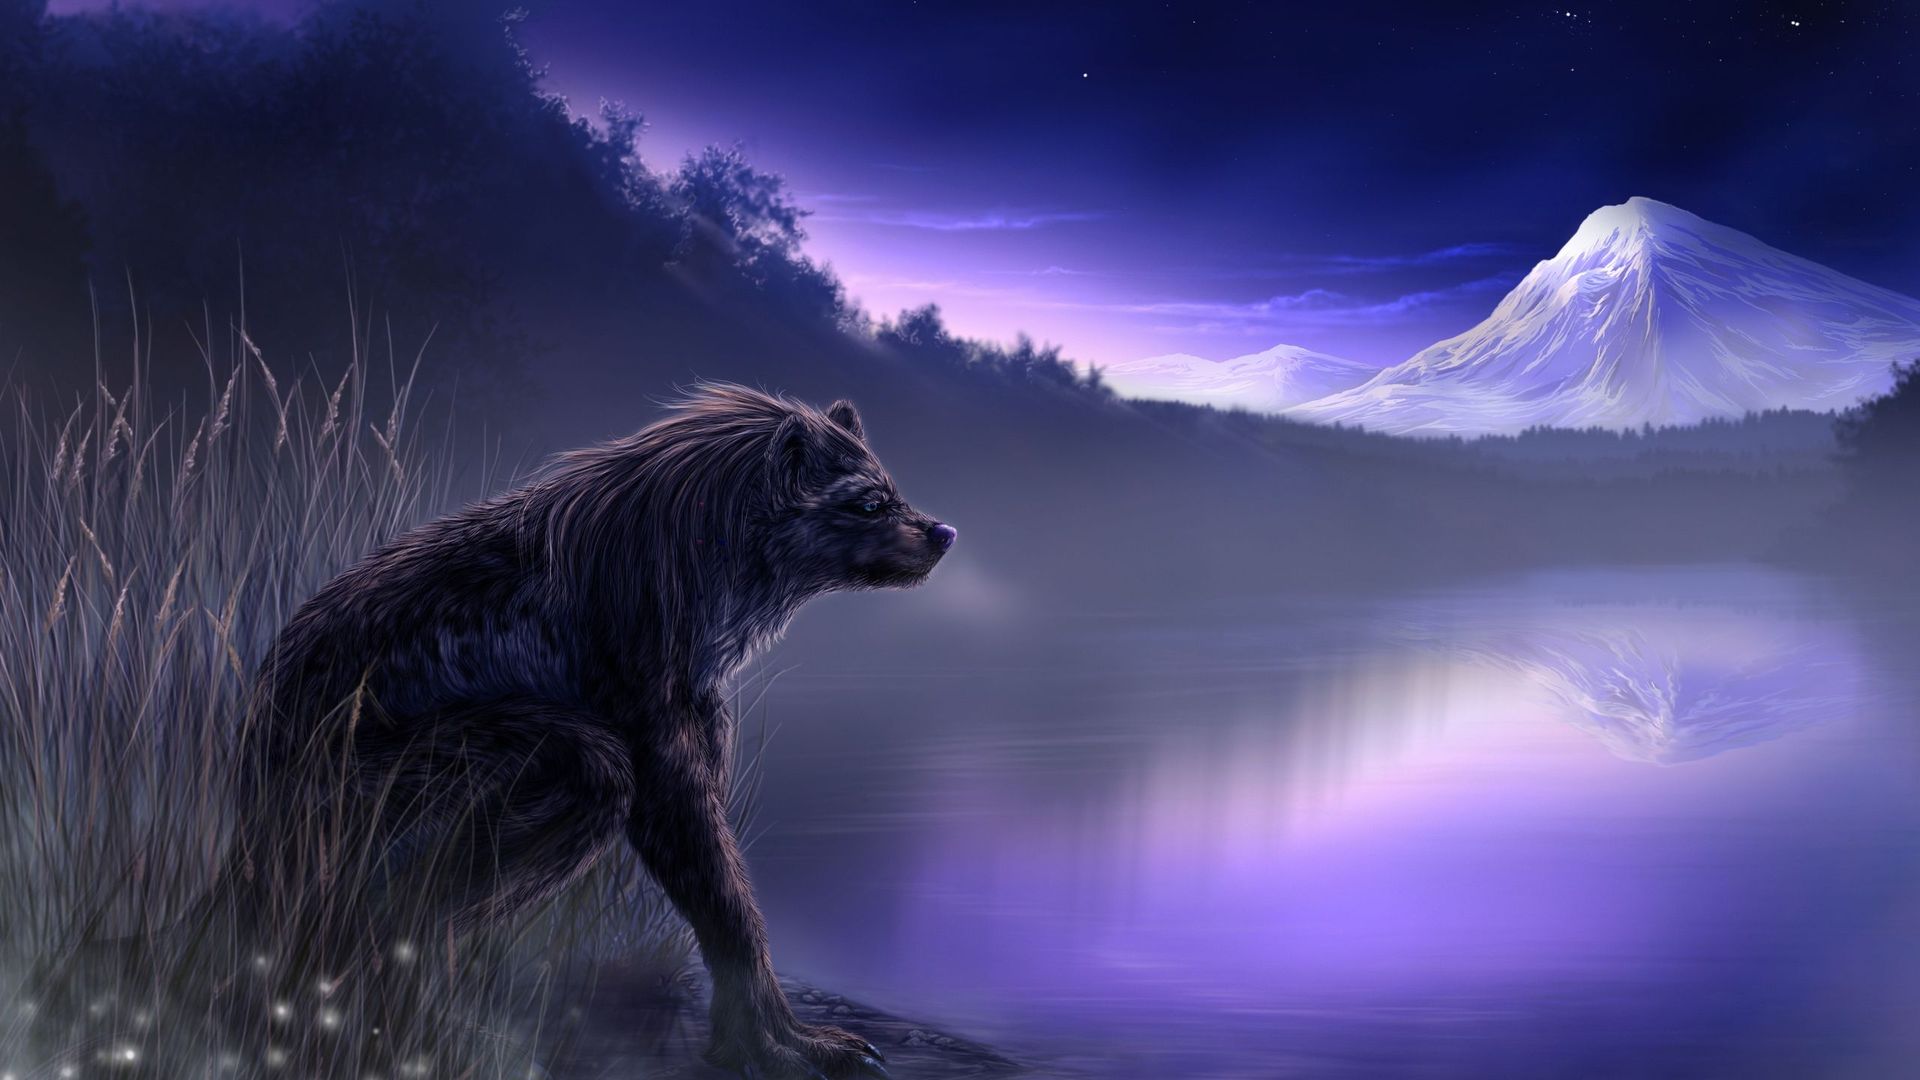 Werewolf on the lake side Wallpaper 15171